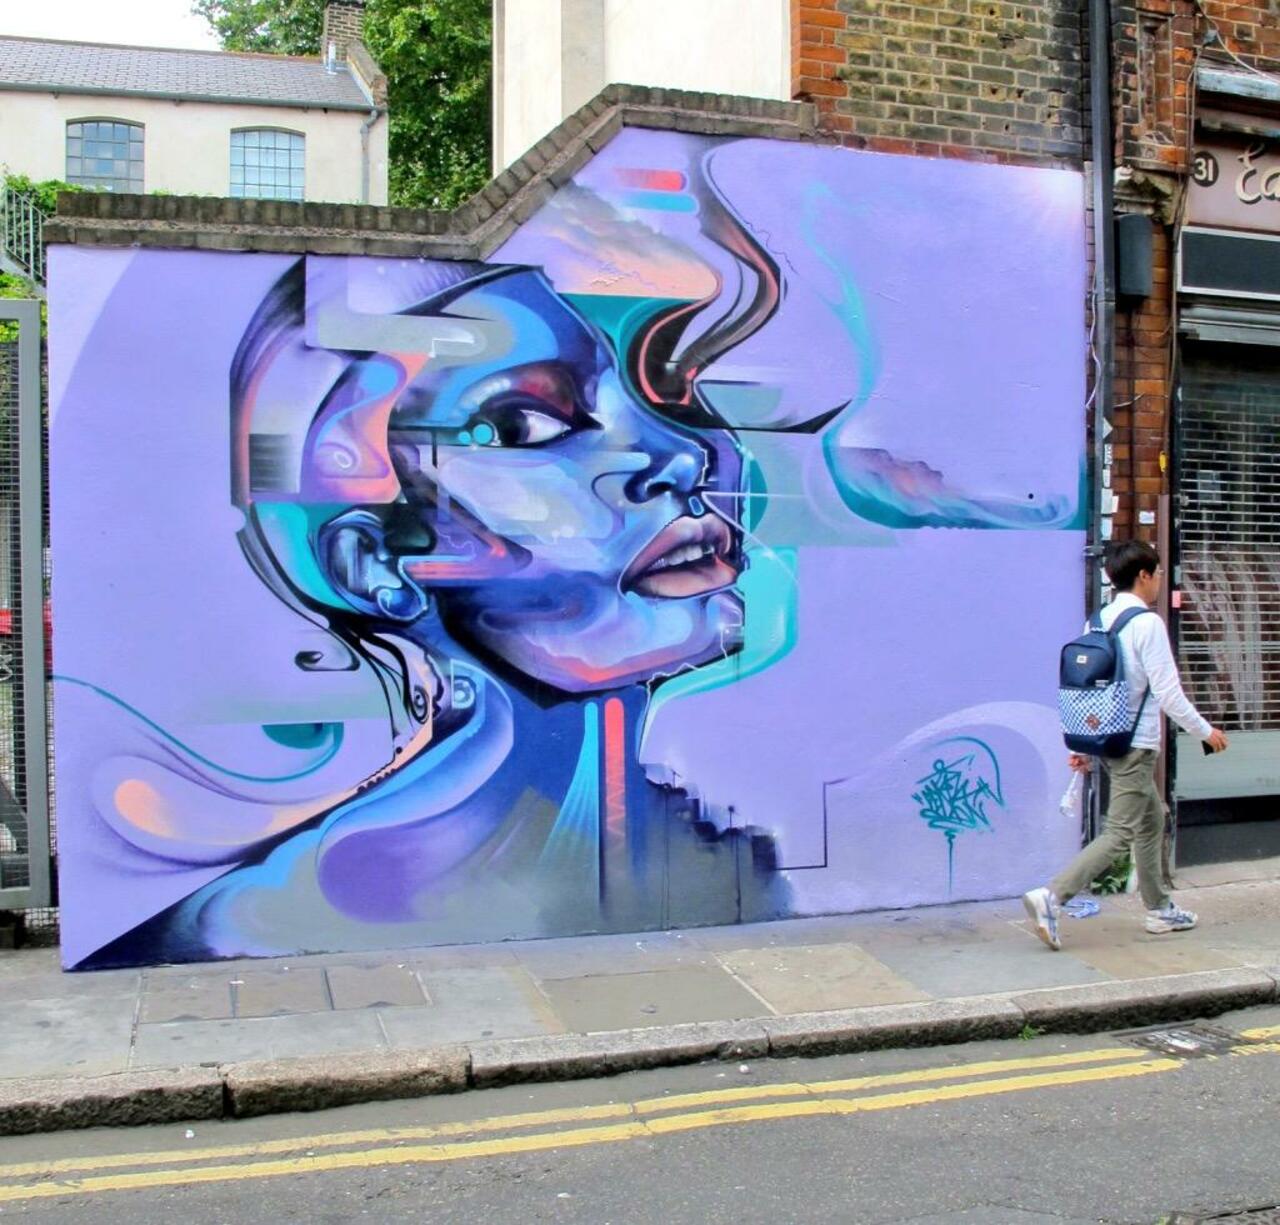 Mr. Cenz
#streetart #art #Graffiti #mural http://t.co/YlSFreniQr